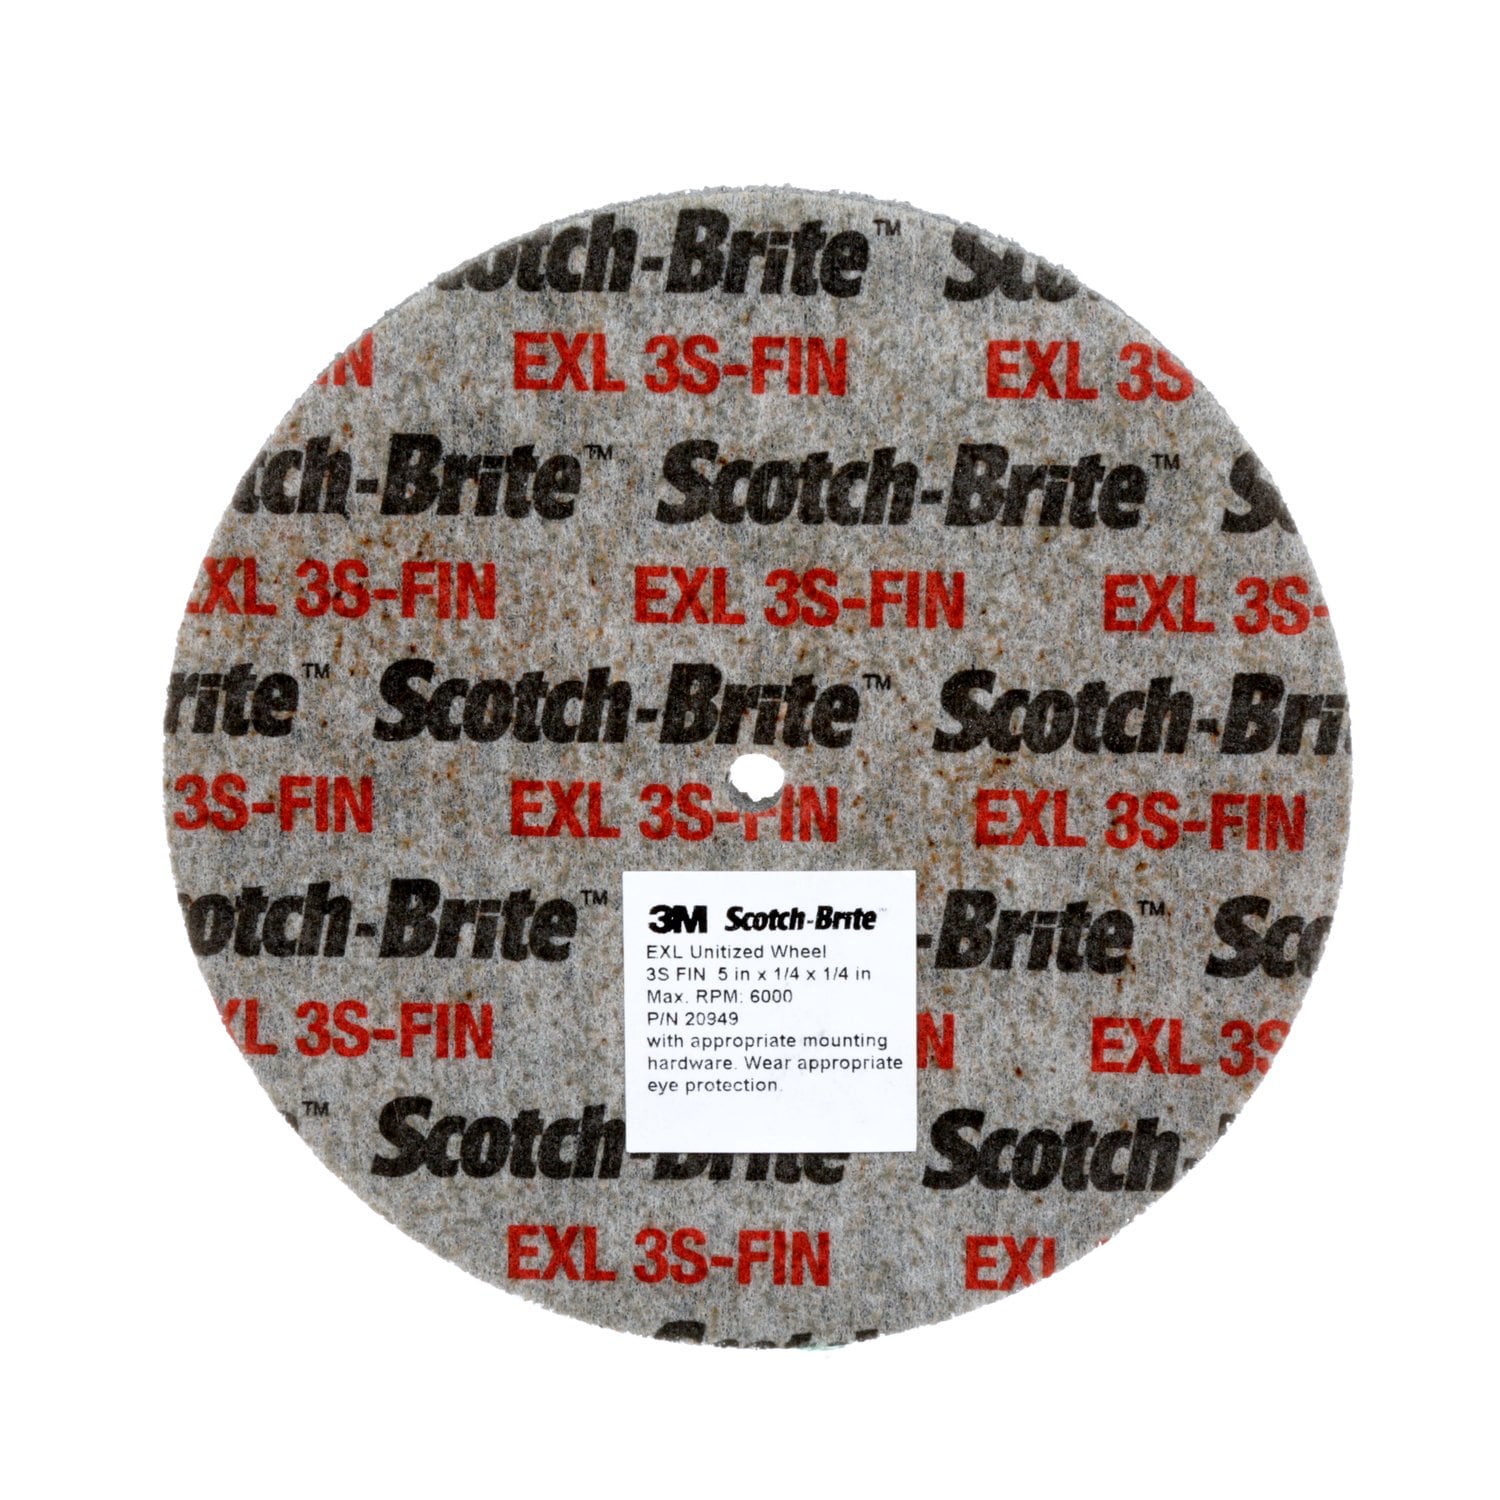 7010365589 - Scotch-Brite SST Unitized Wheel, 1 in x 1 in x 3/16 in 7S FIN, 50
ea/Case